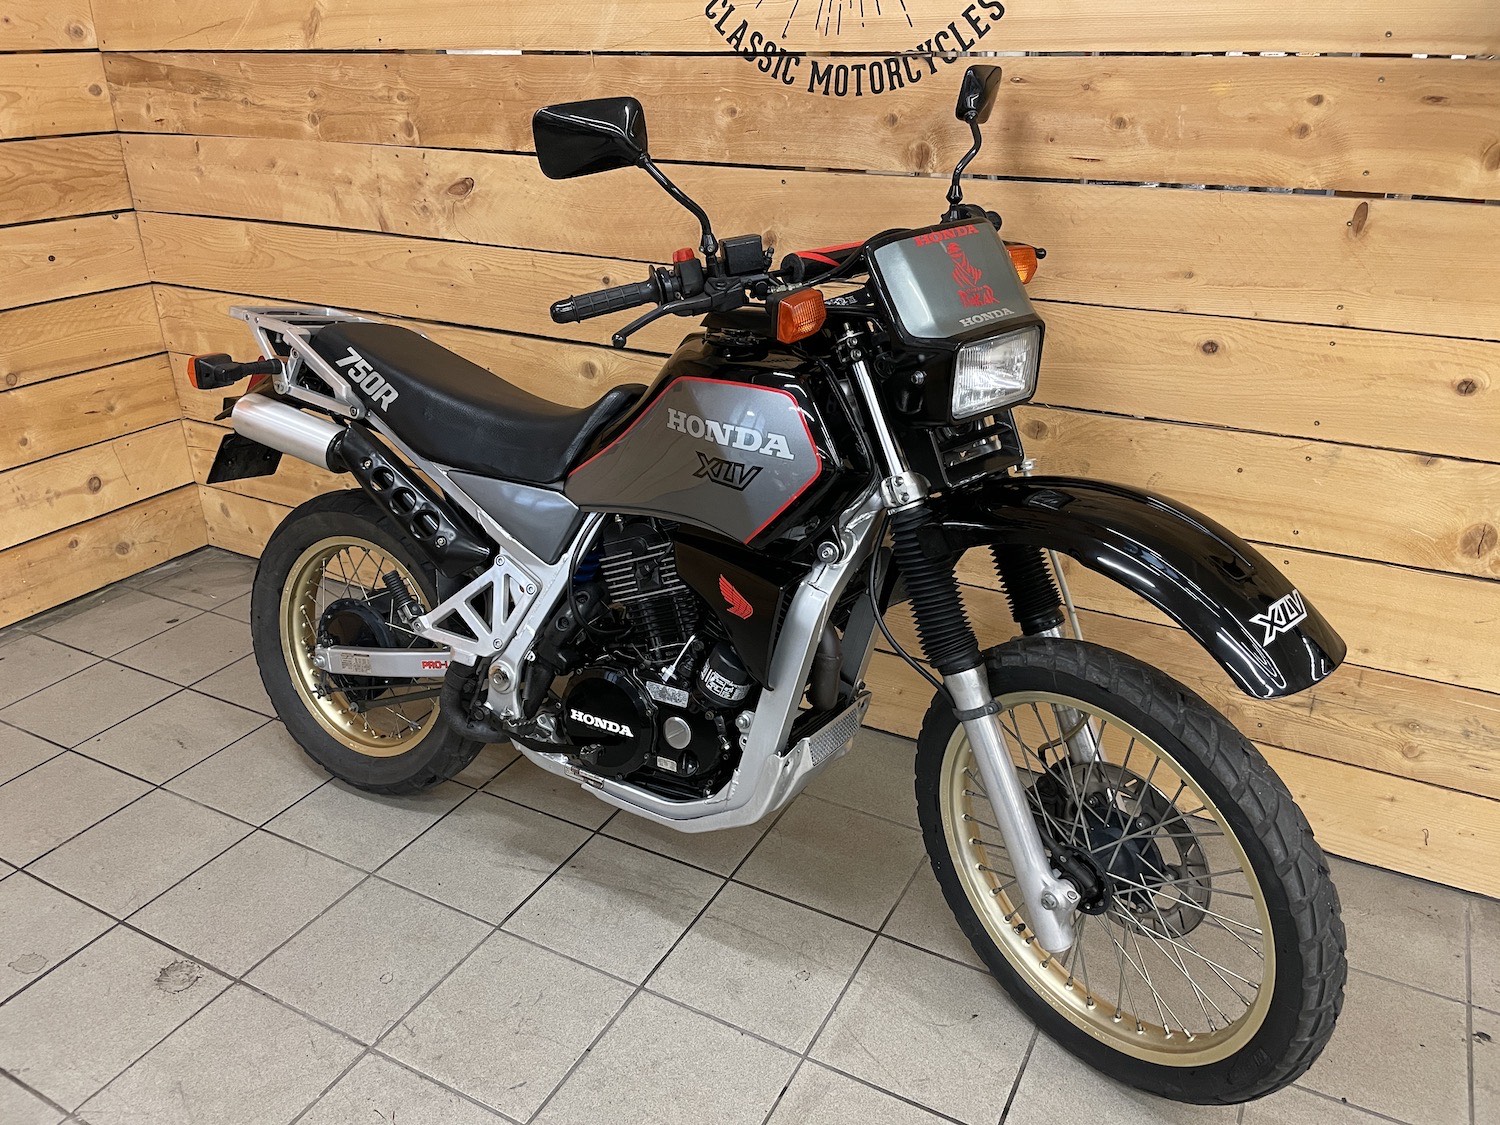 Honda_XLV_750R_cezanne_classic_motorcycles_12-118.jpg